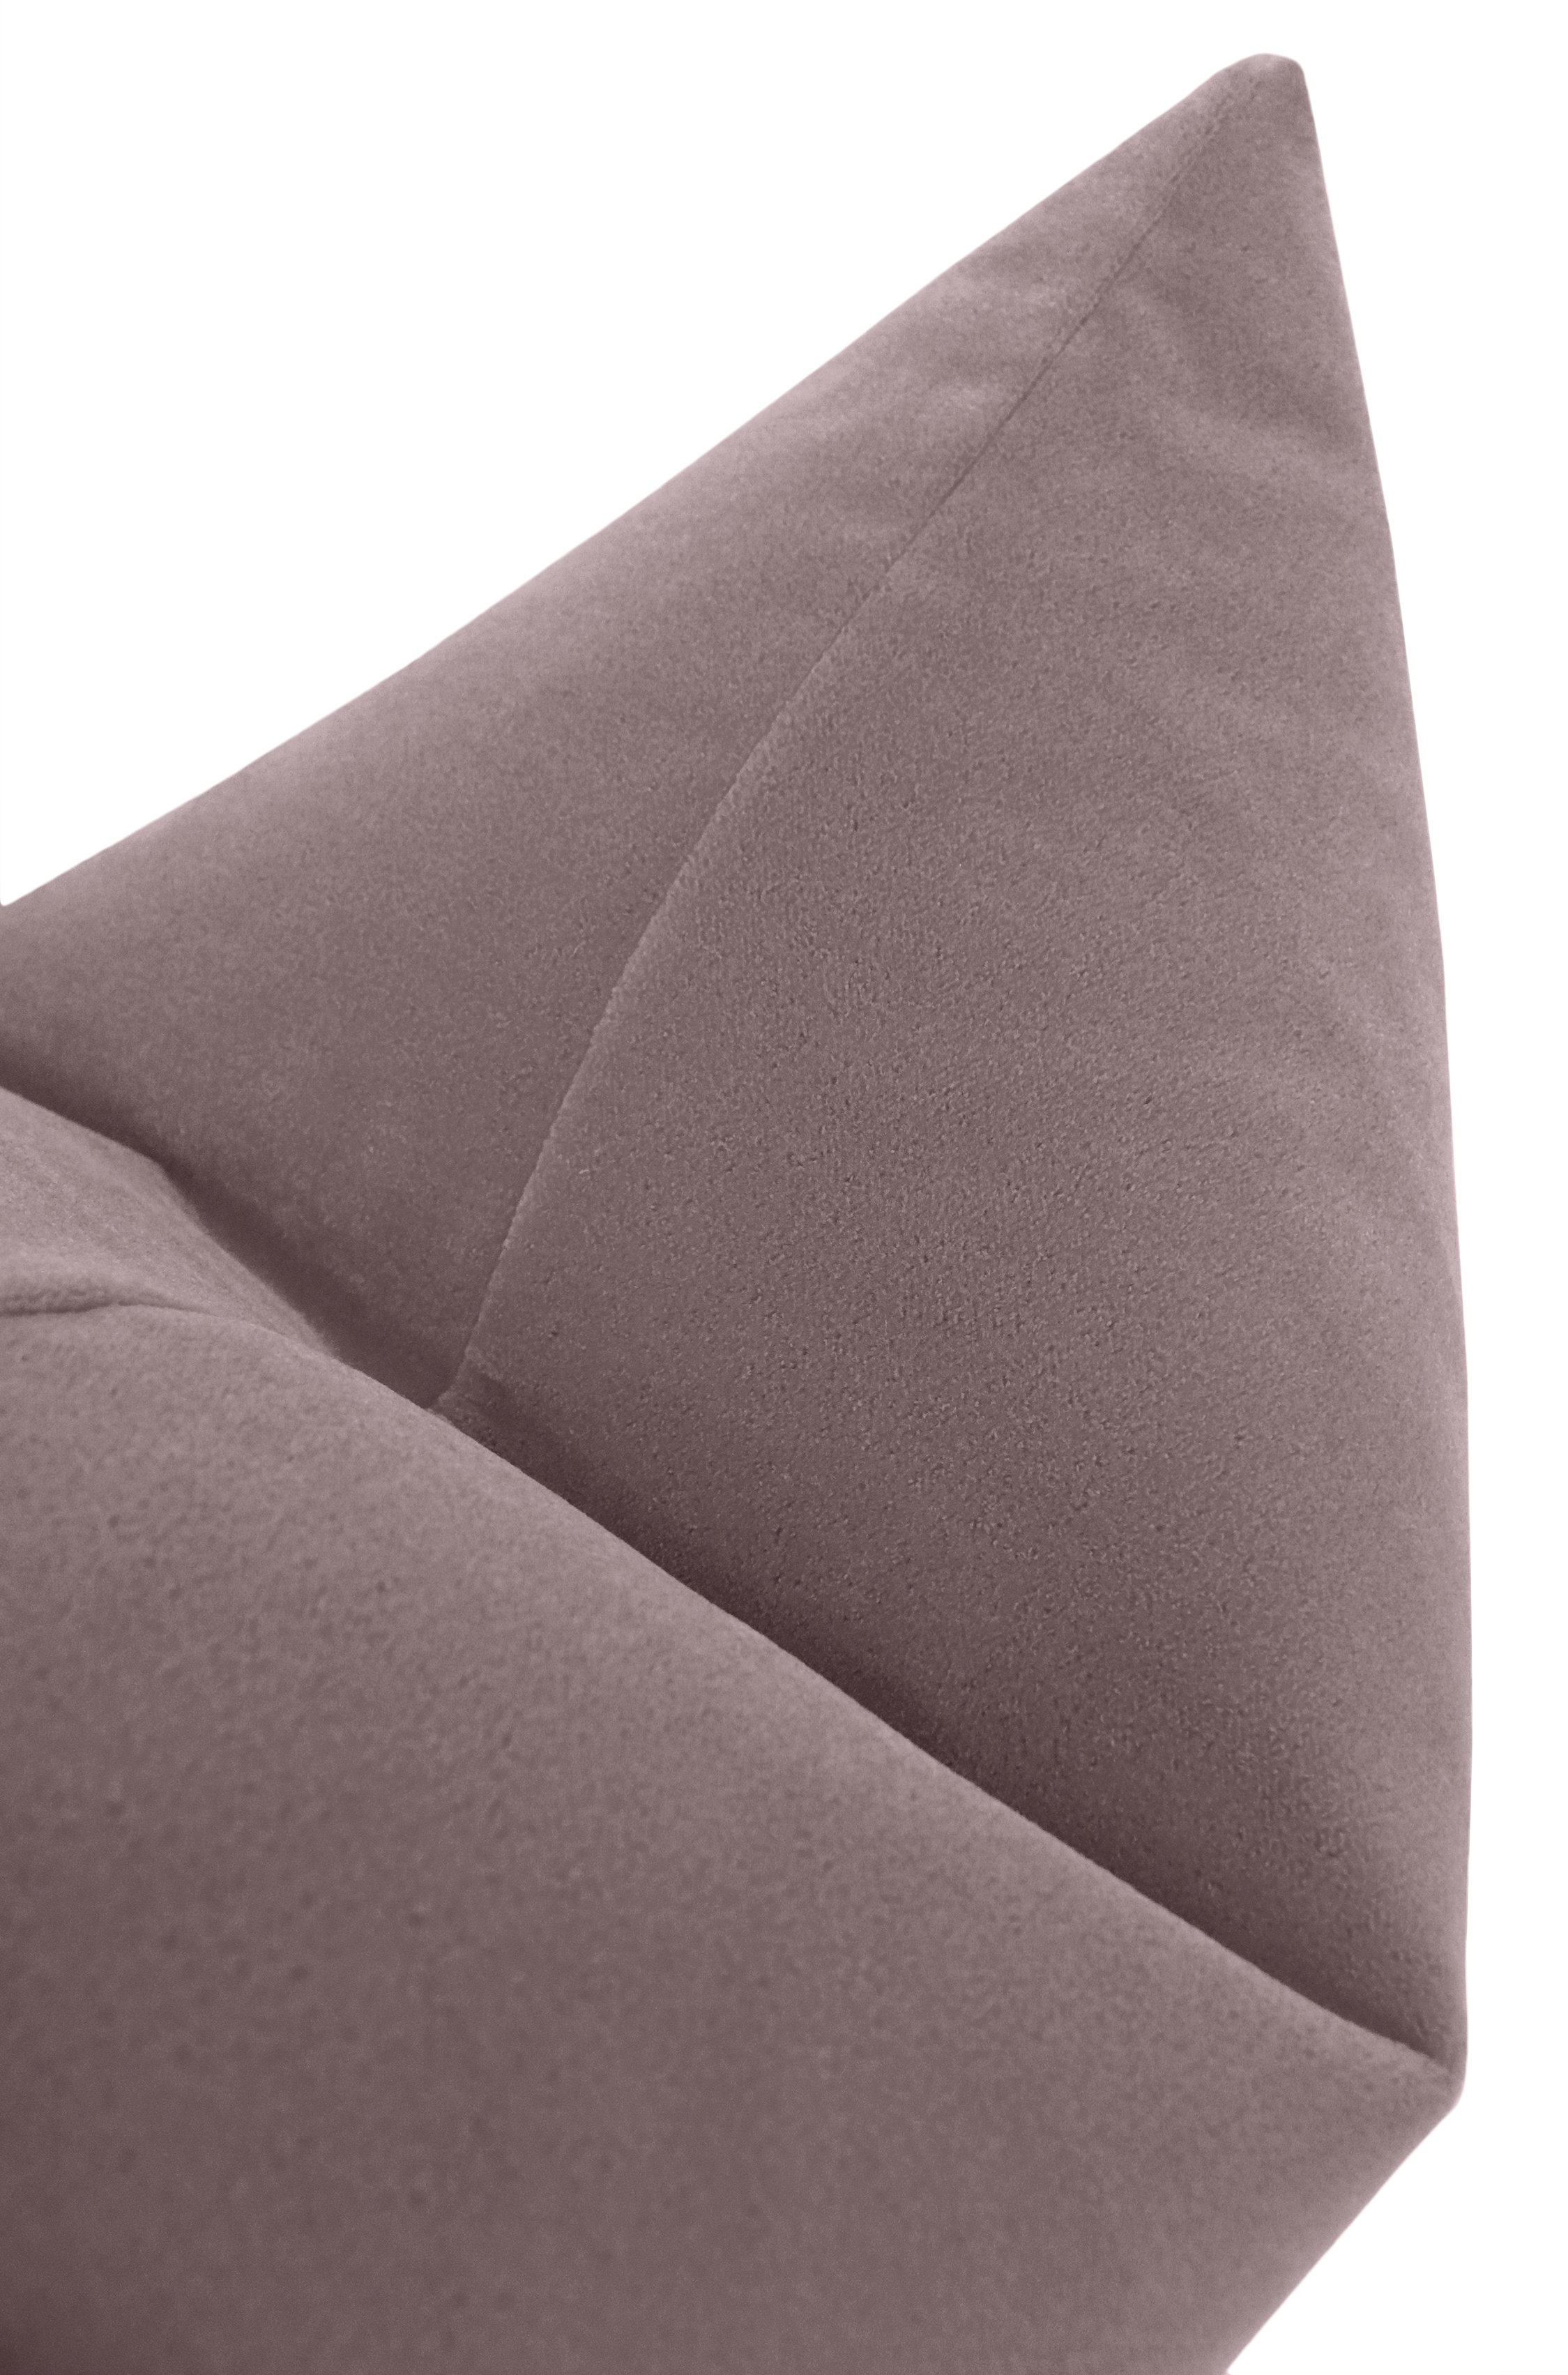 Mohair Velvet Throw Pillow Cover, Smokey Lavender, 18" x 18" - Image 1